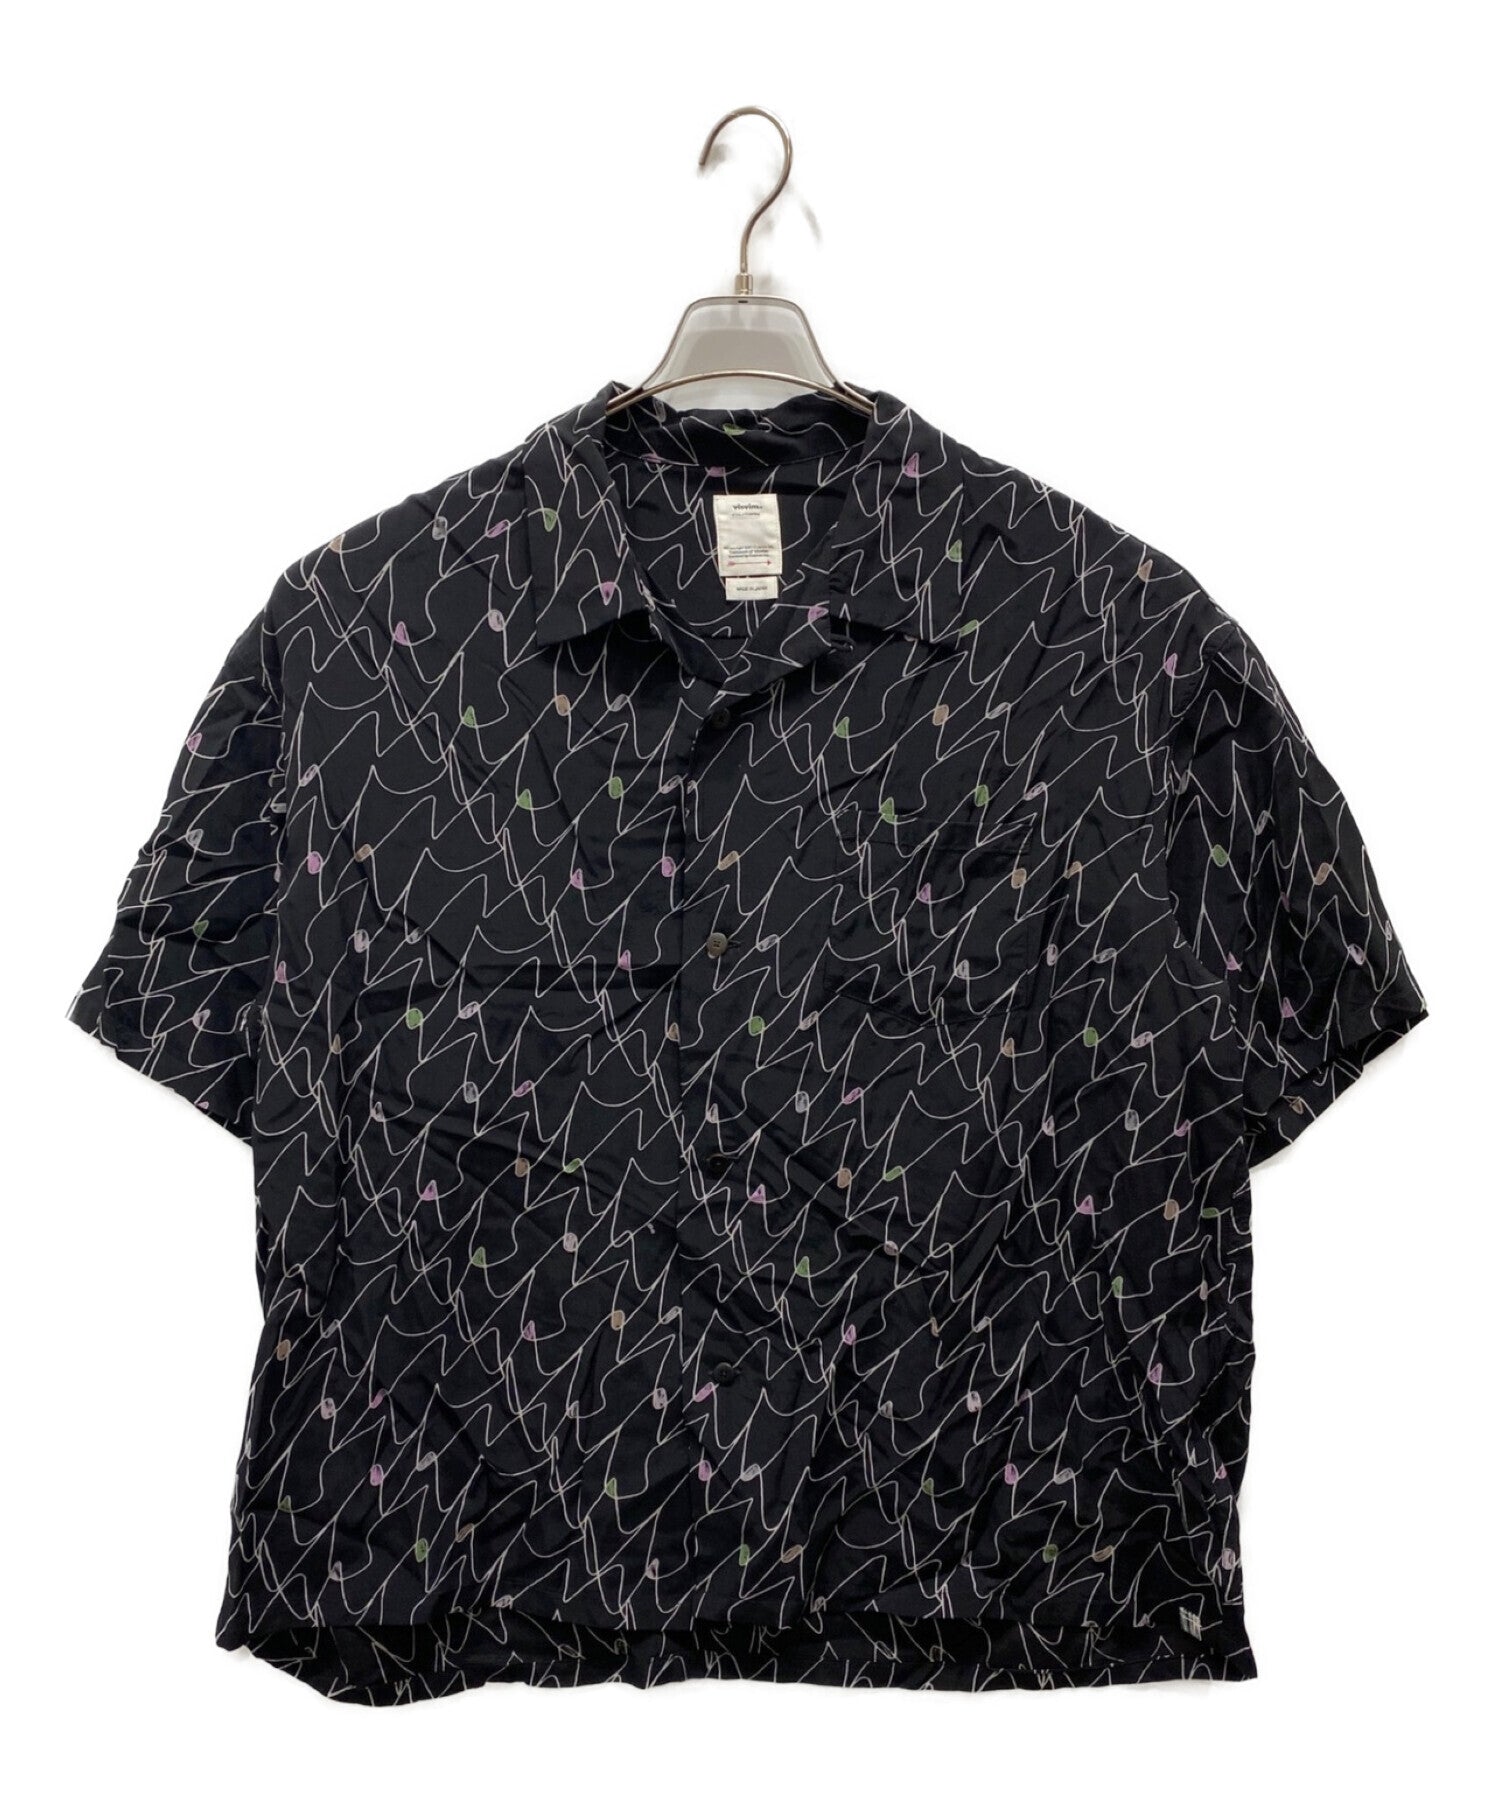 visvim wallis shirt s/s black size 3 - トップス